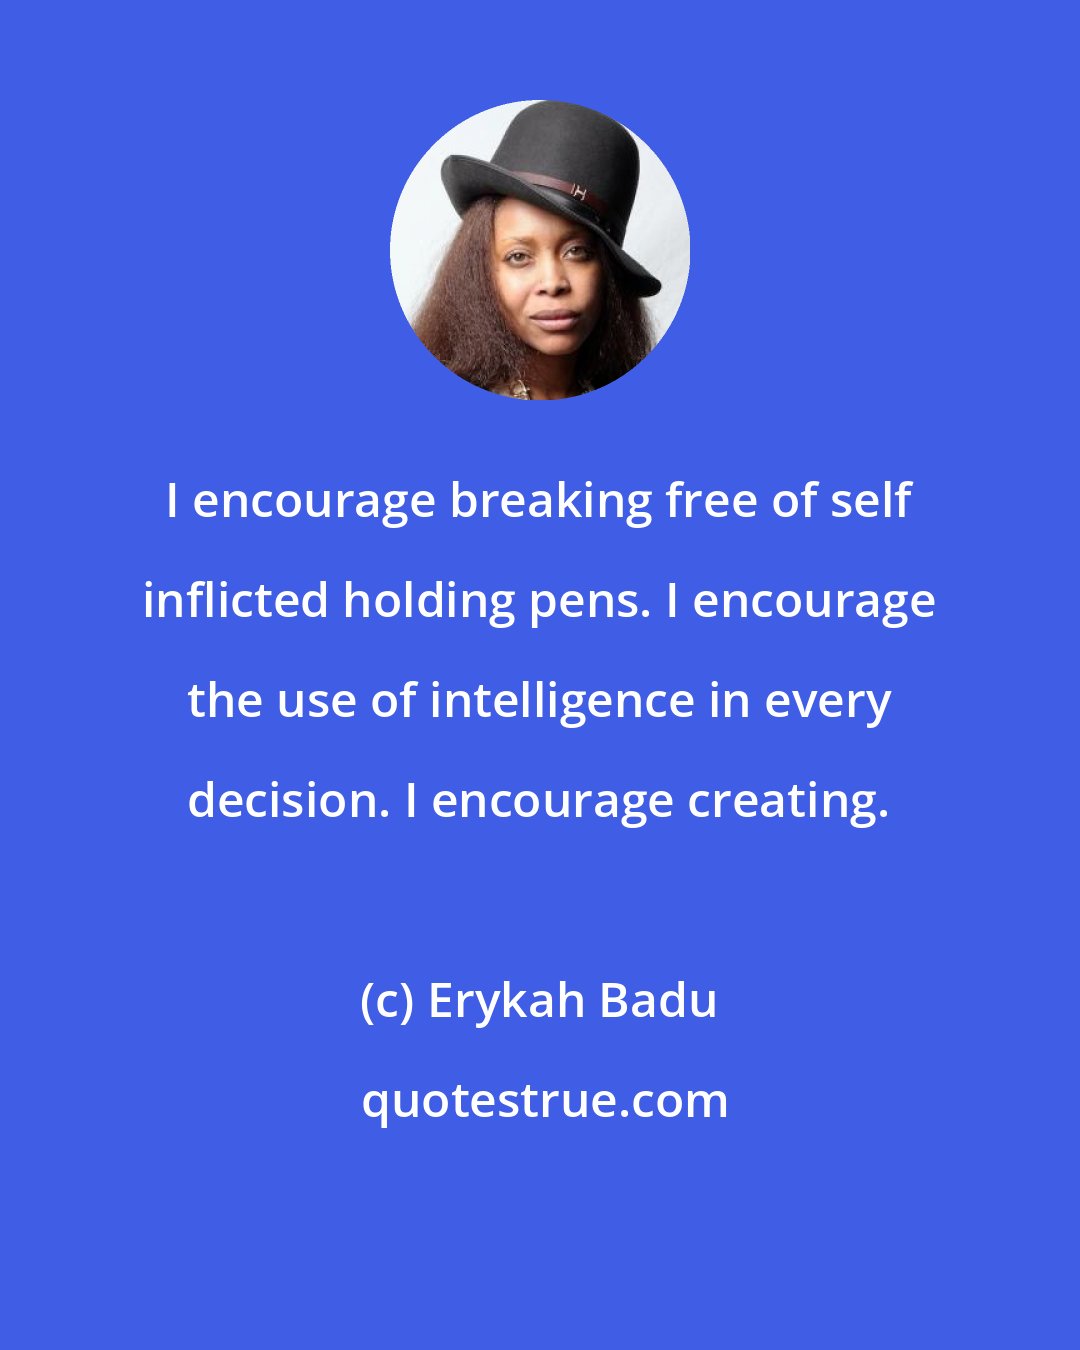 Erykah Badu: I encourage breaking free of self inflicted holding pens. I encourage the use of intelligence in every decision. I encourage creating.